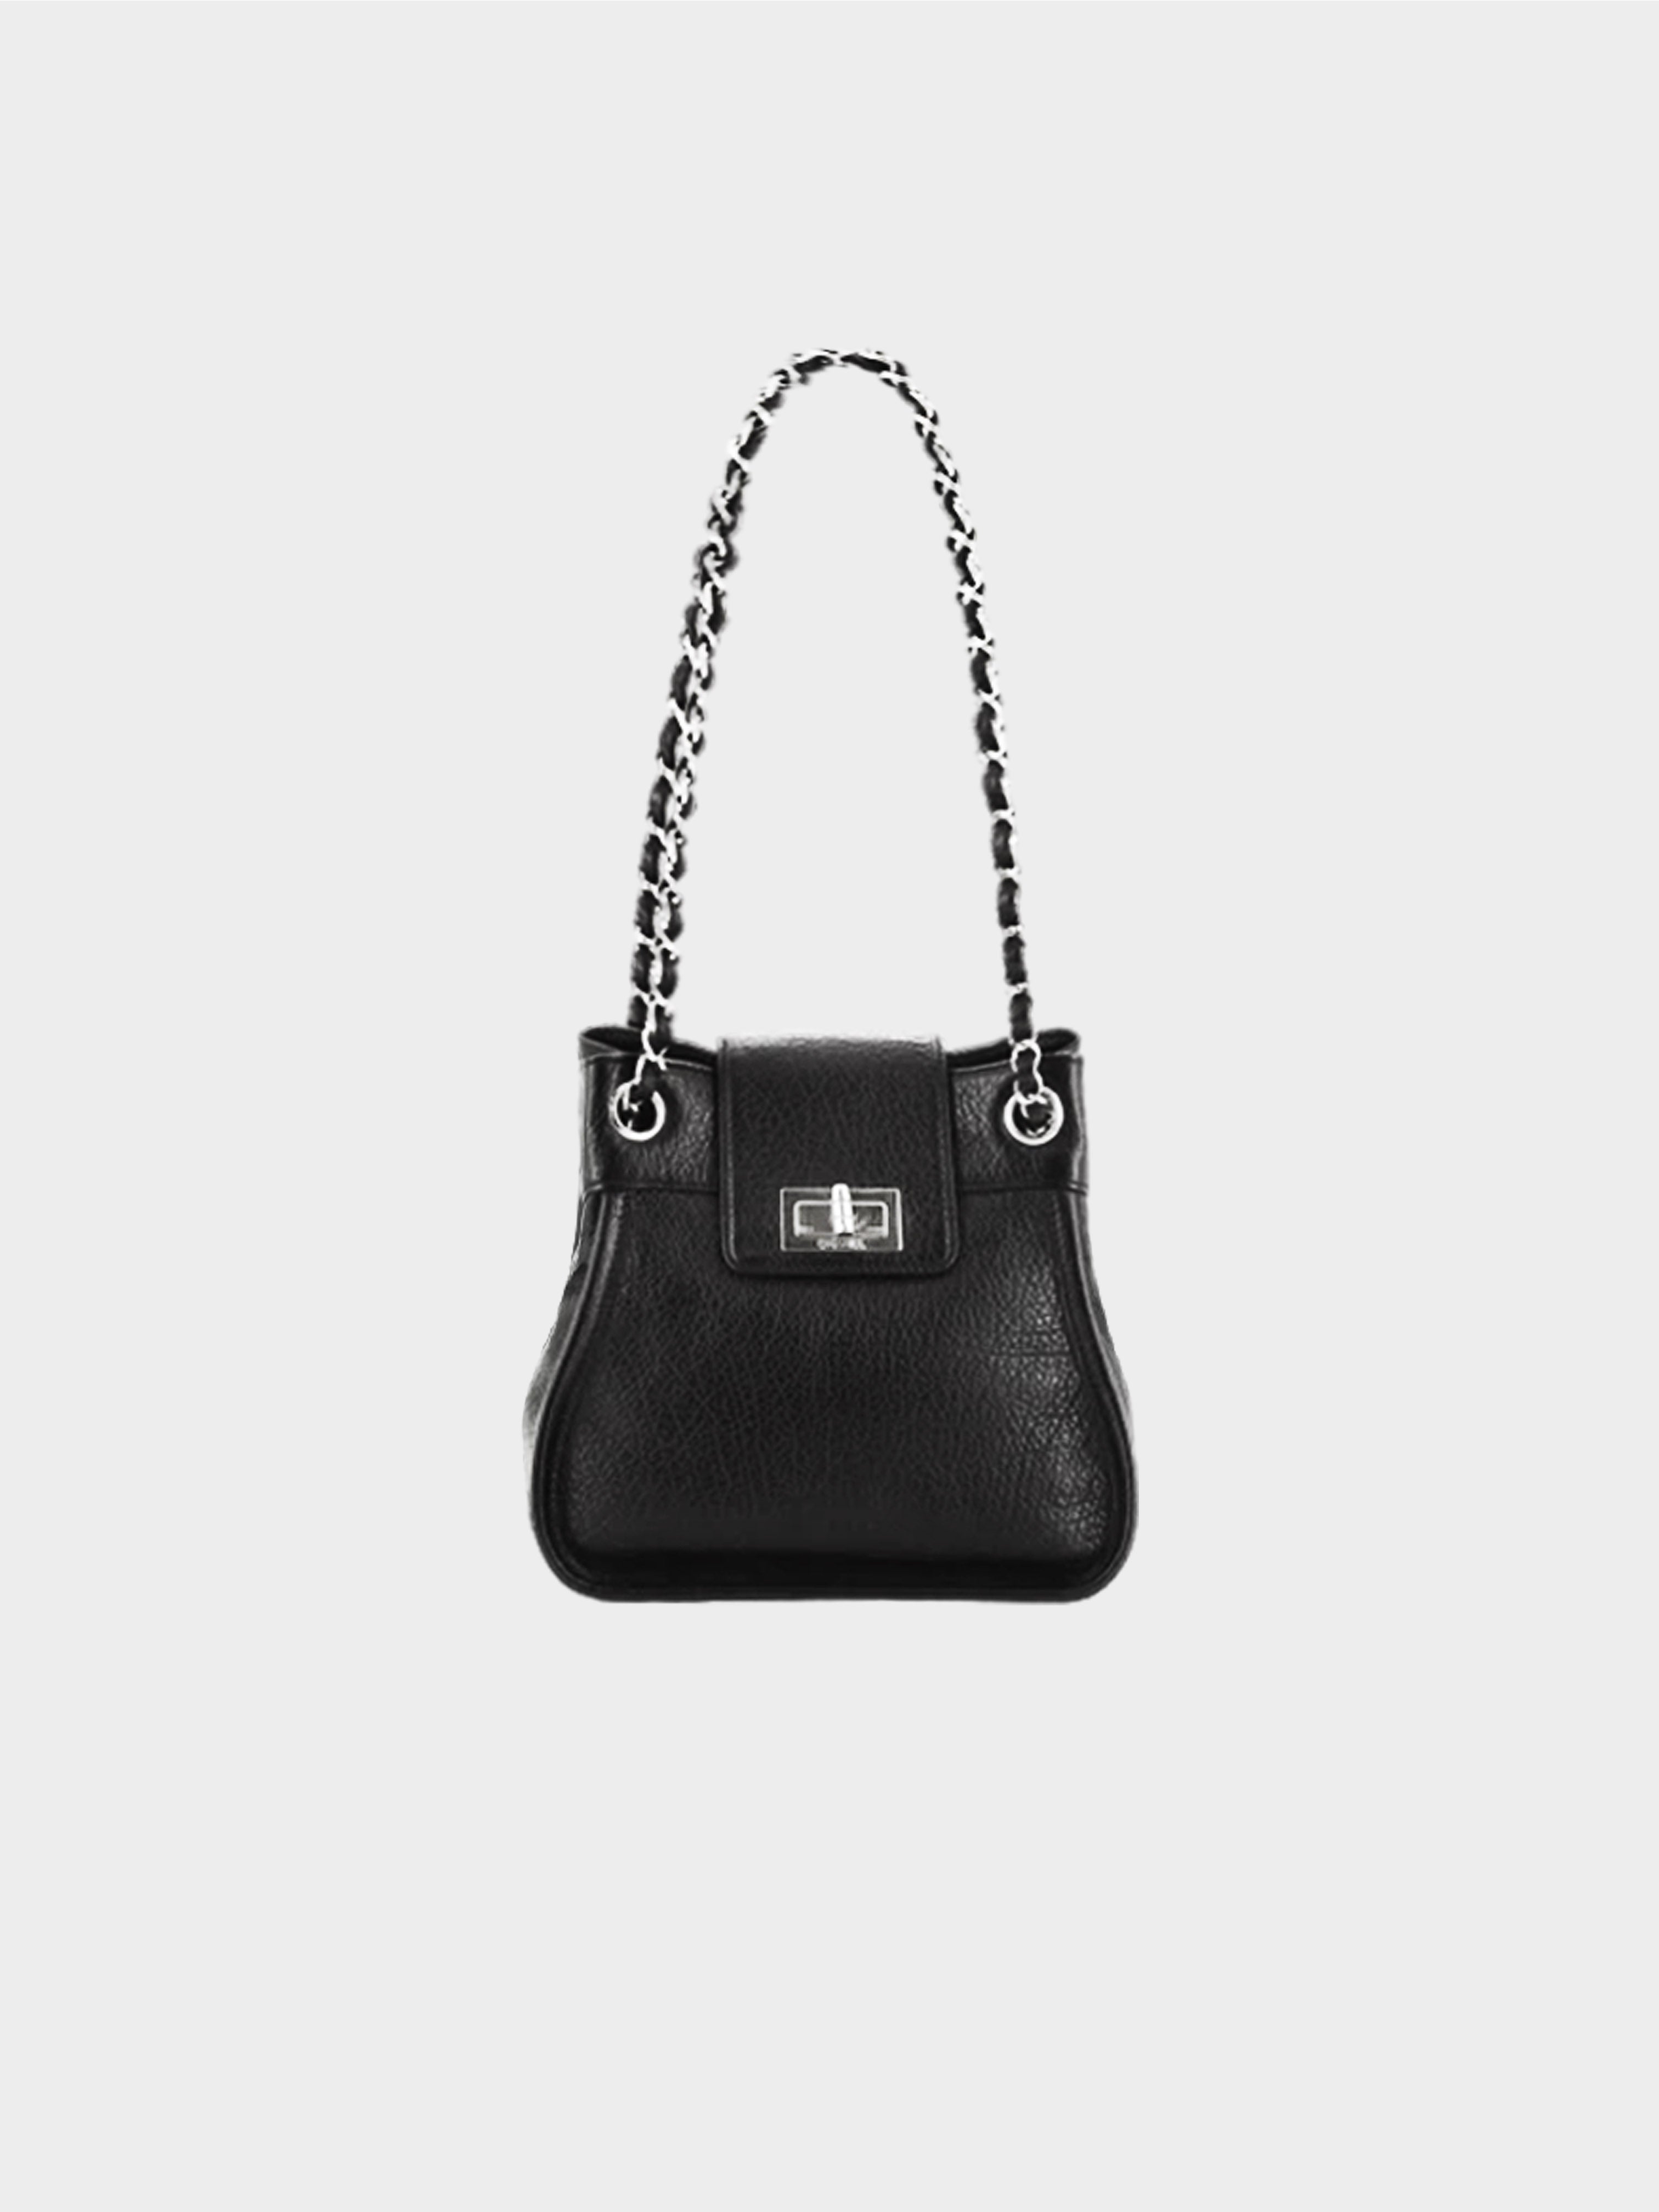 Chanel 2003 Black Mademoiselle Reissue Accordion Bucket Bag